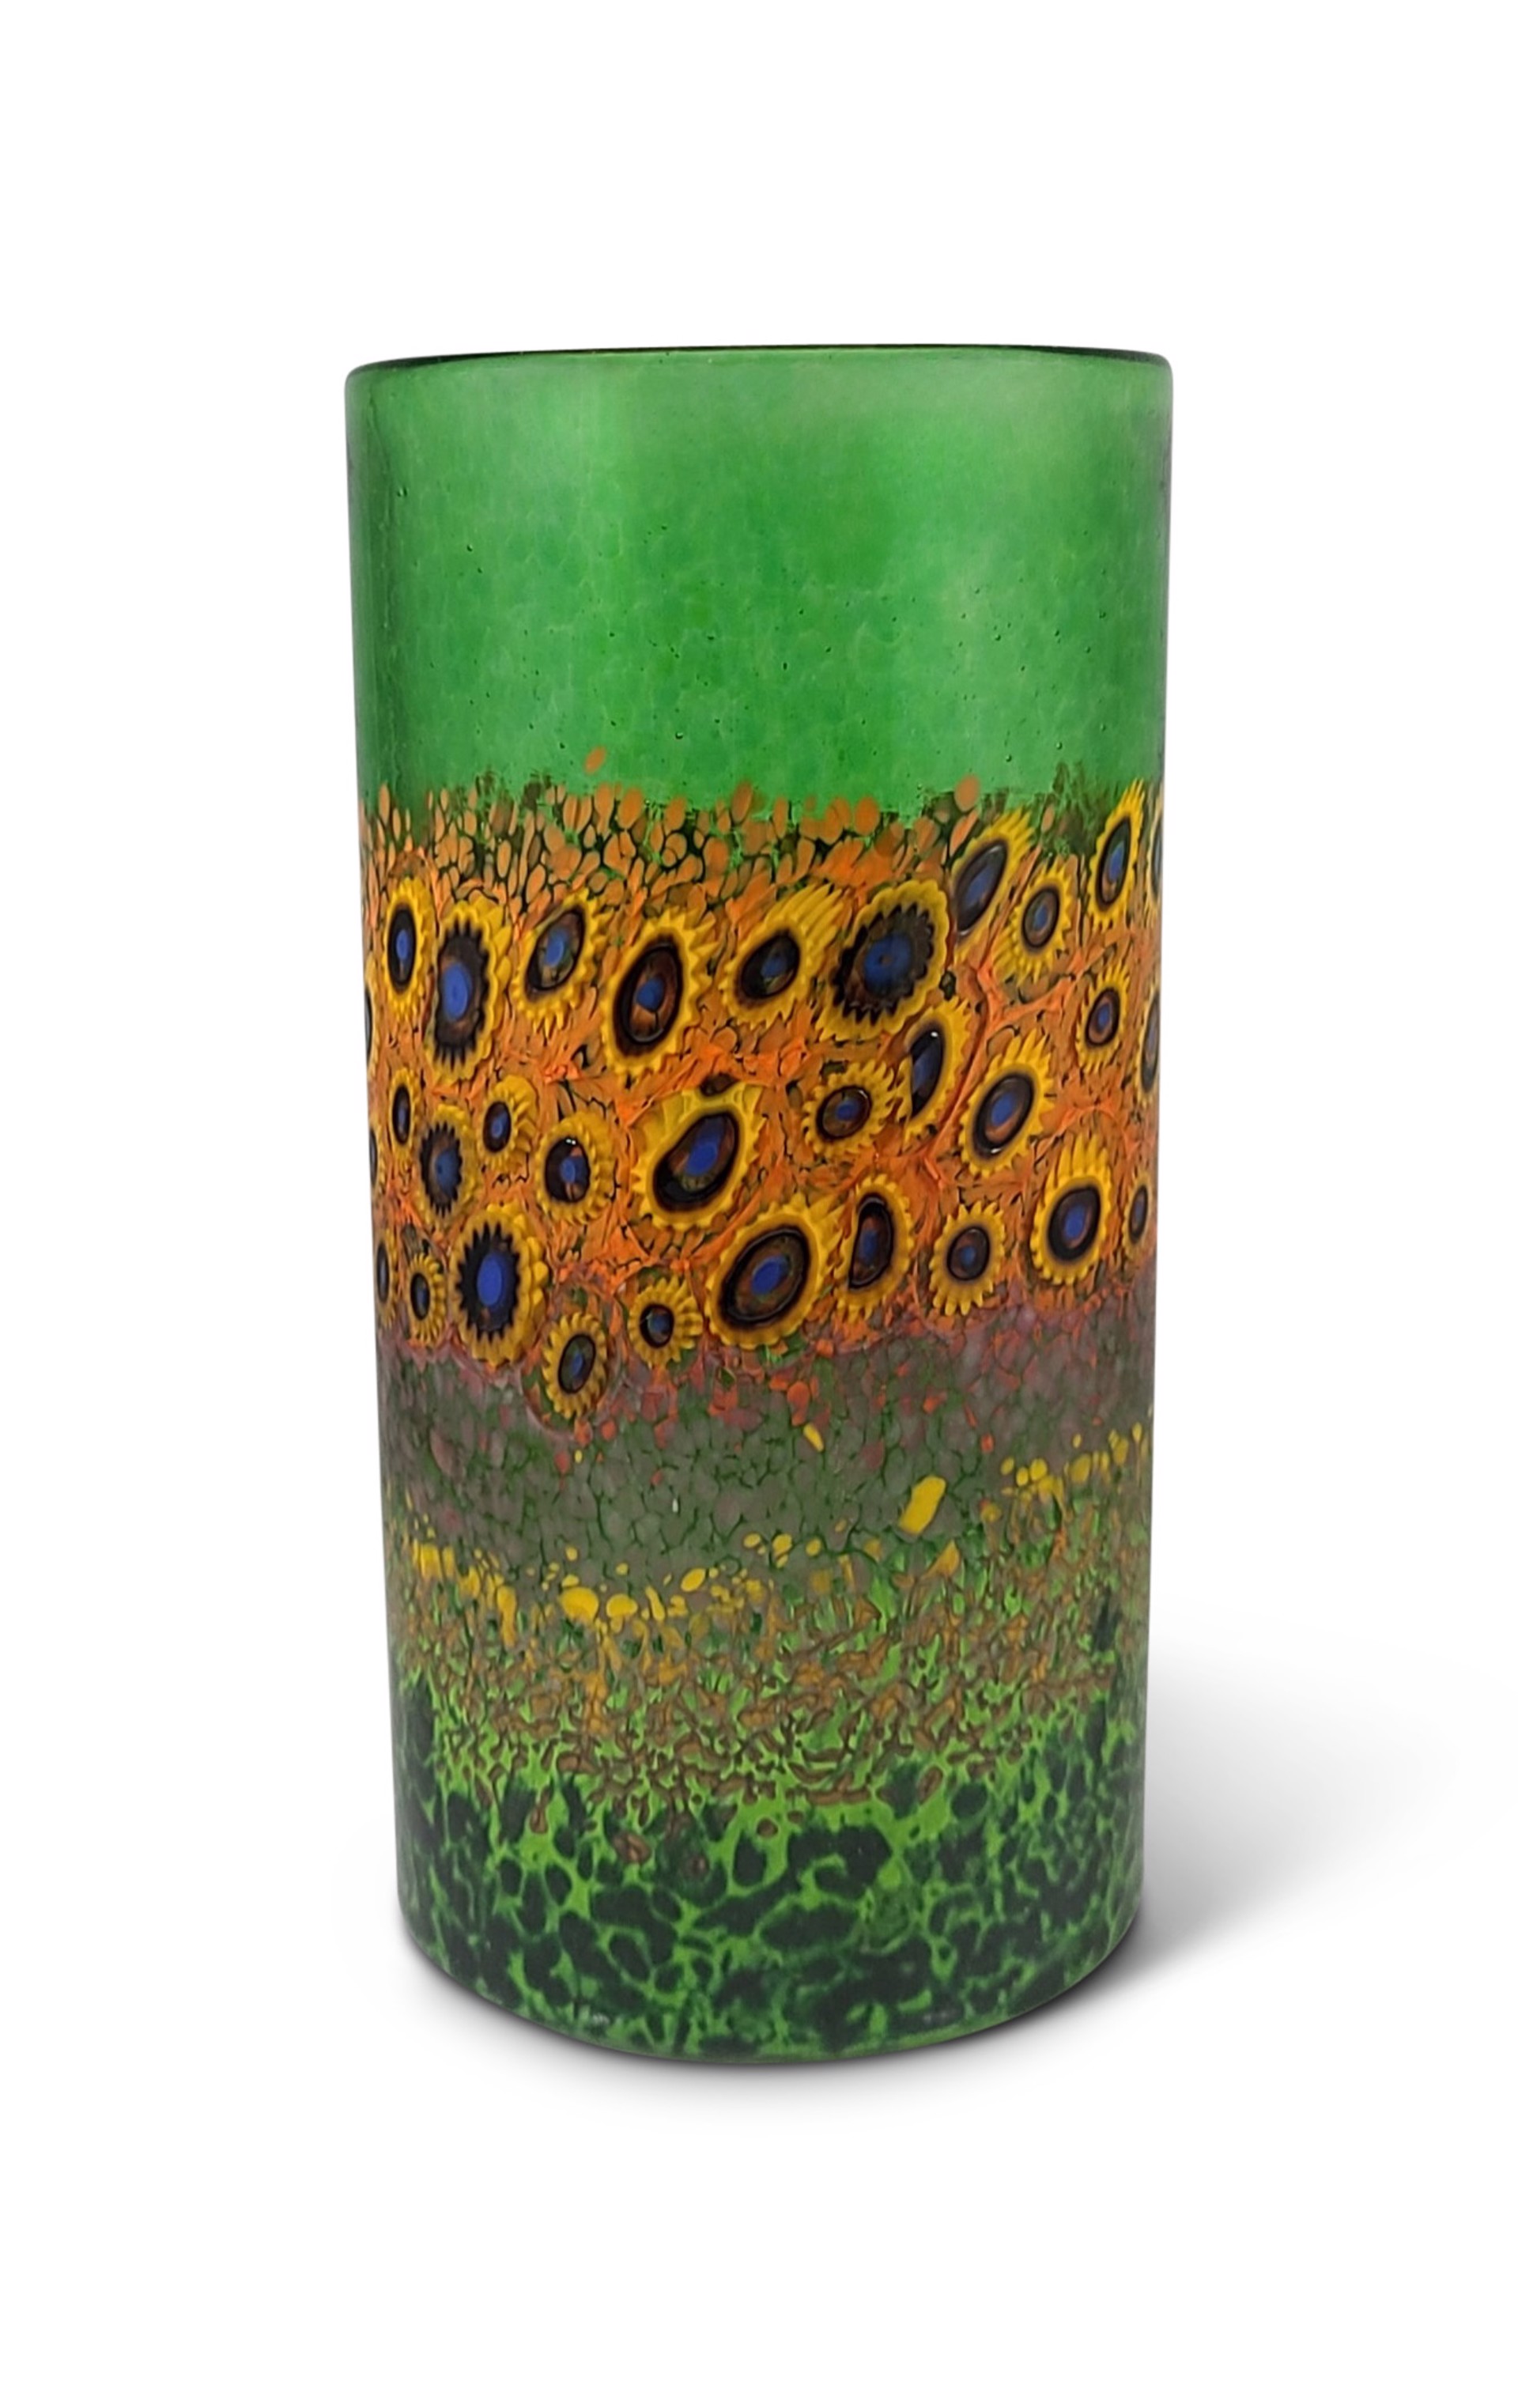 Green Tall Murrini Sunflower Tumbler by Ken Hanson & Ingrid Hanson